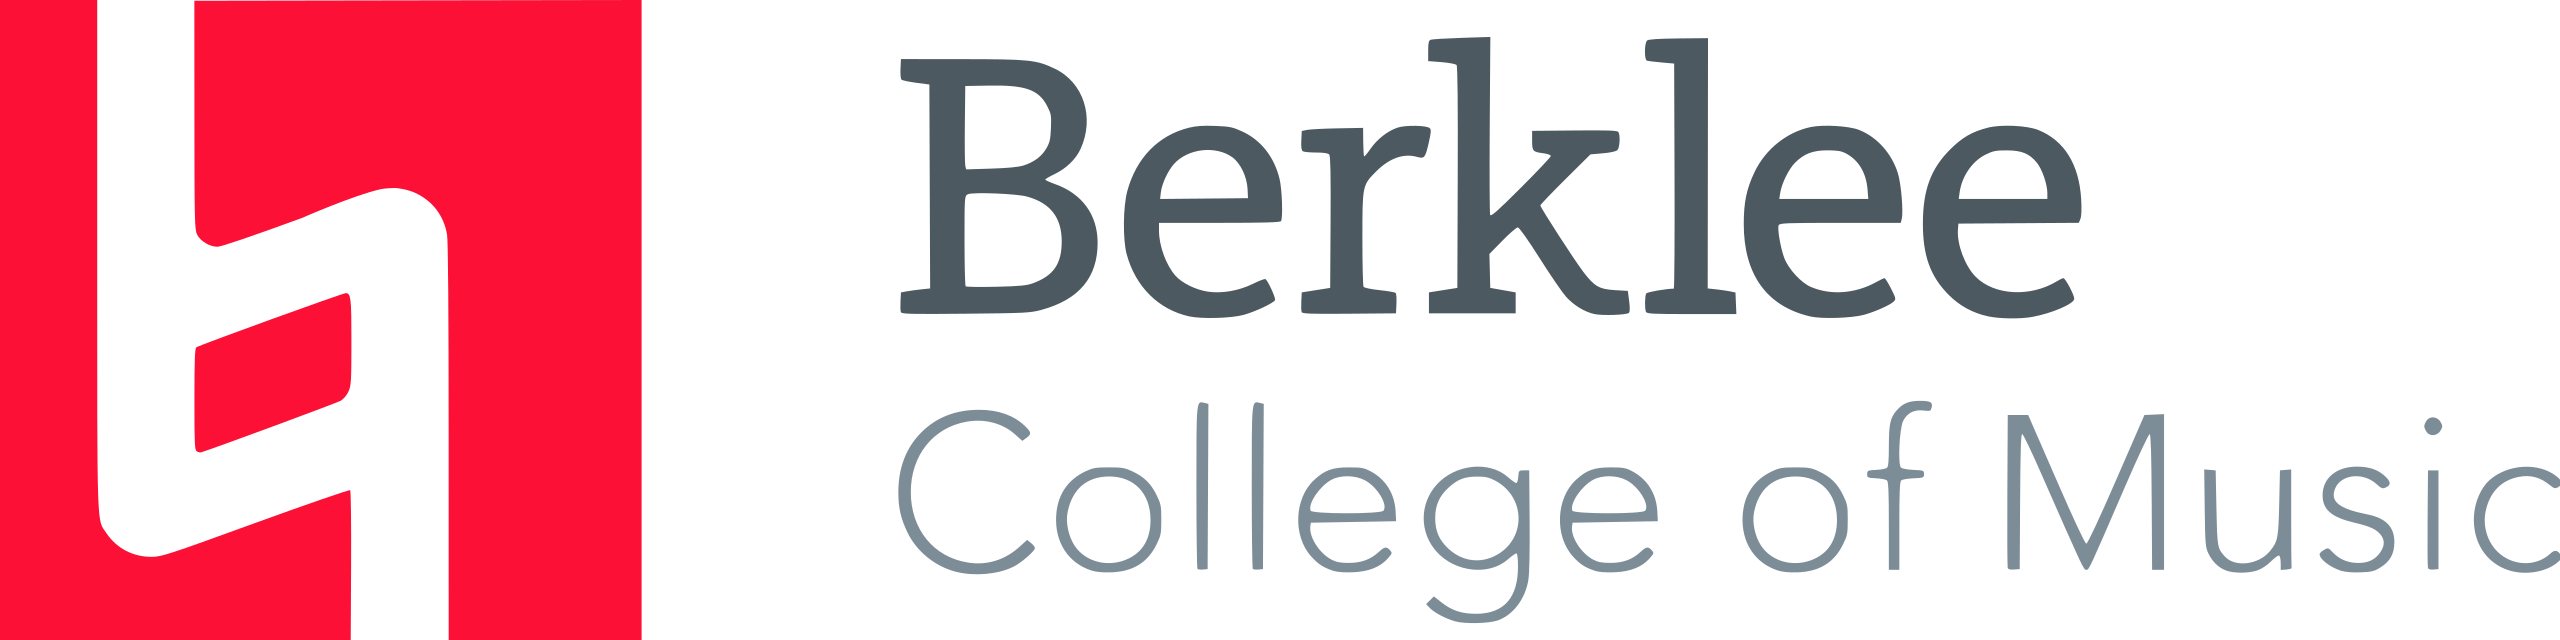 File:Berklee College of Music logo and wordmark.svg - Wikipedia